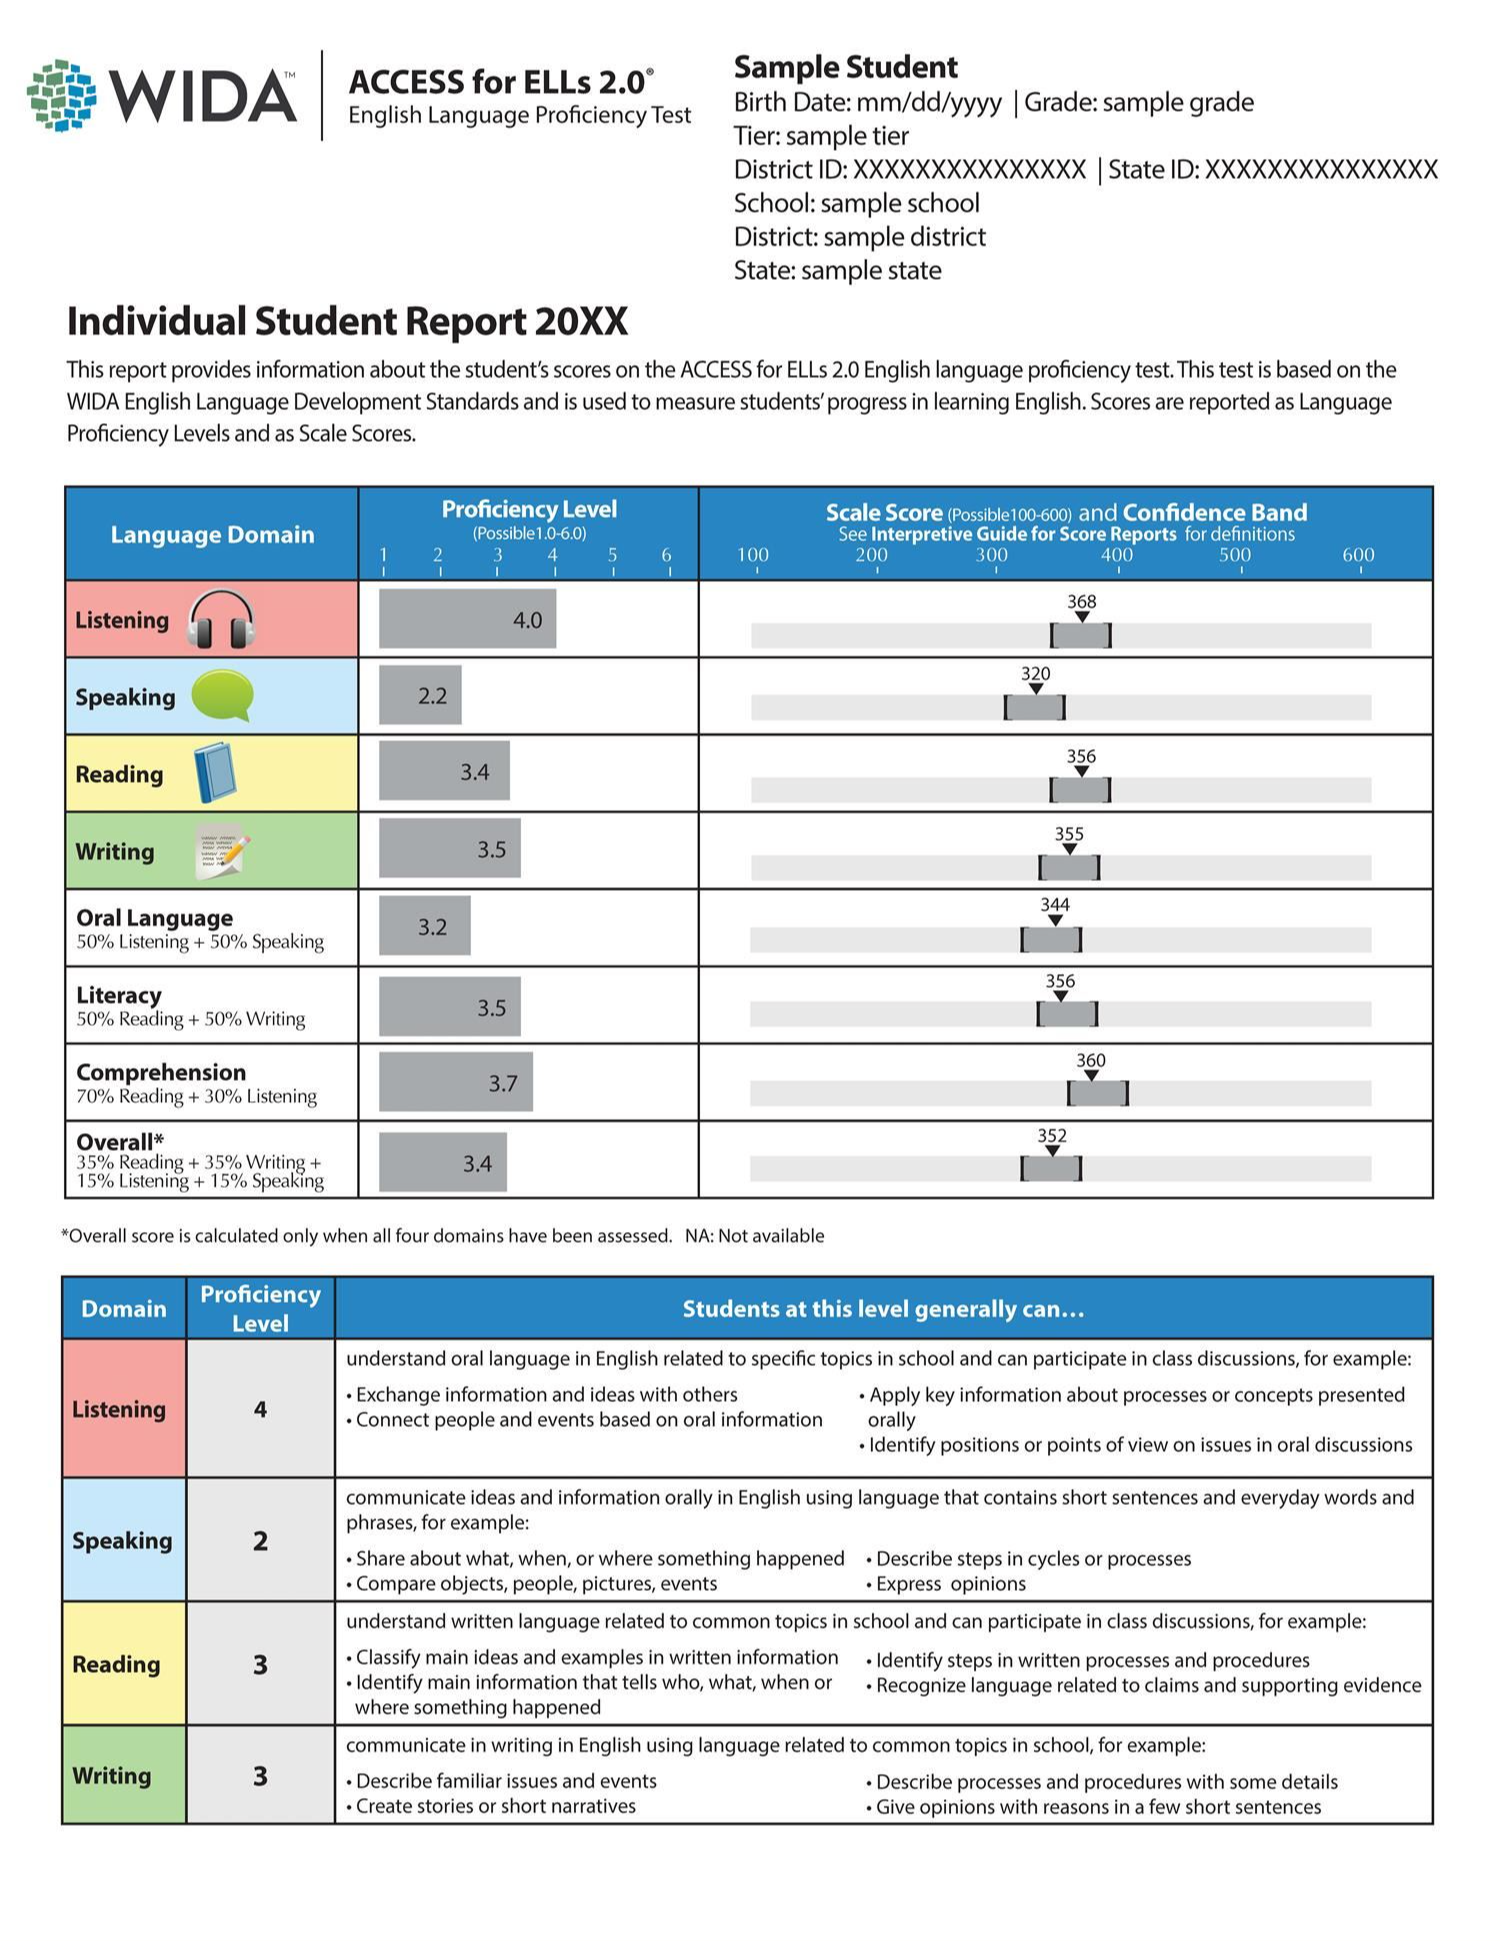 Sample Student Score Report -English